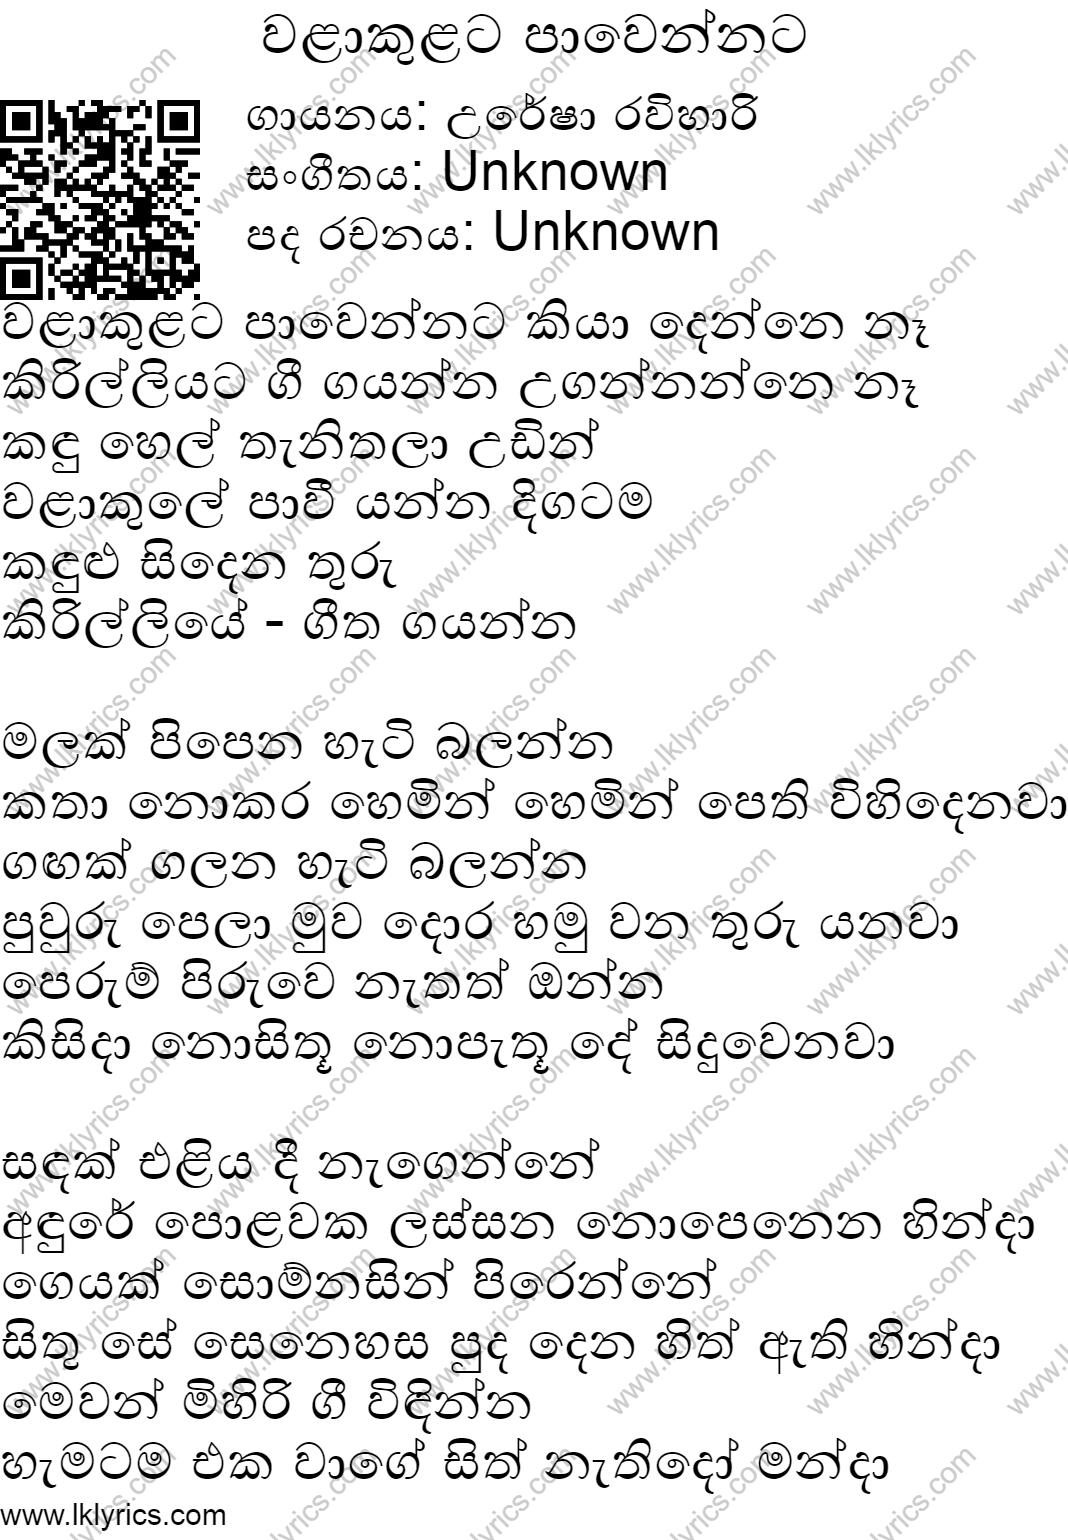 walakulata pawennata uresha lyrics mp3